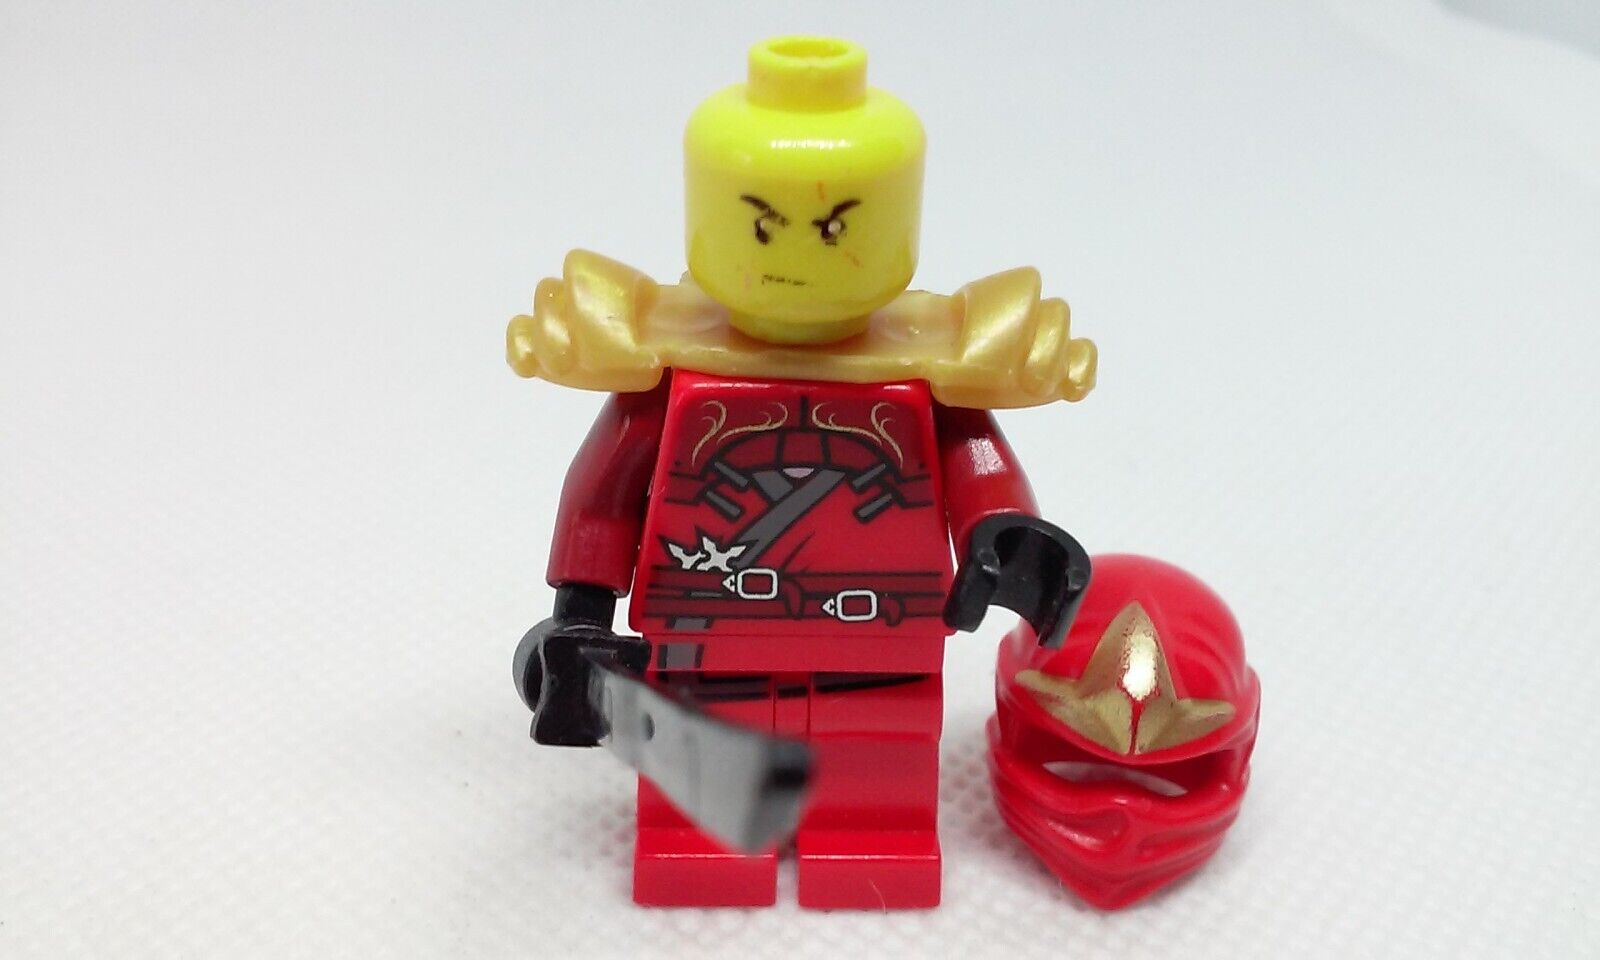 Lego Ninjago Kai ZX Red Ninja #9446 with Armor Authentic Minifigure | eBay